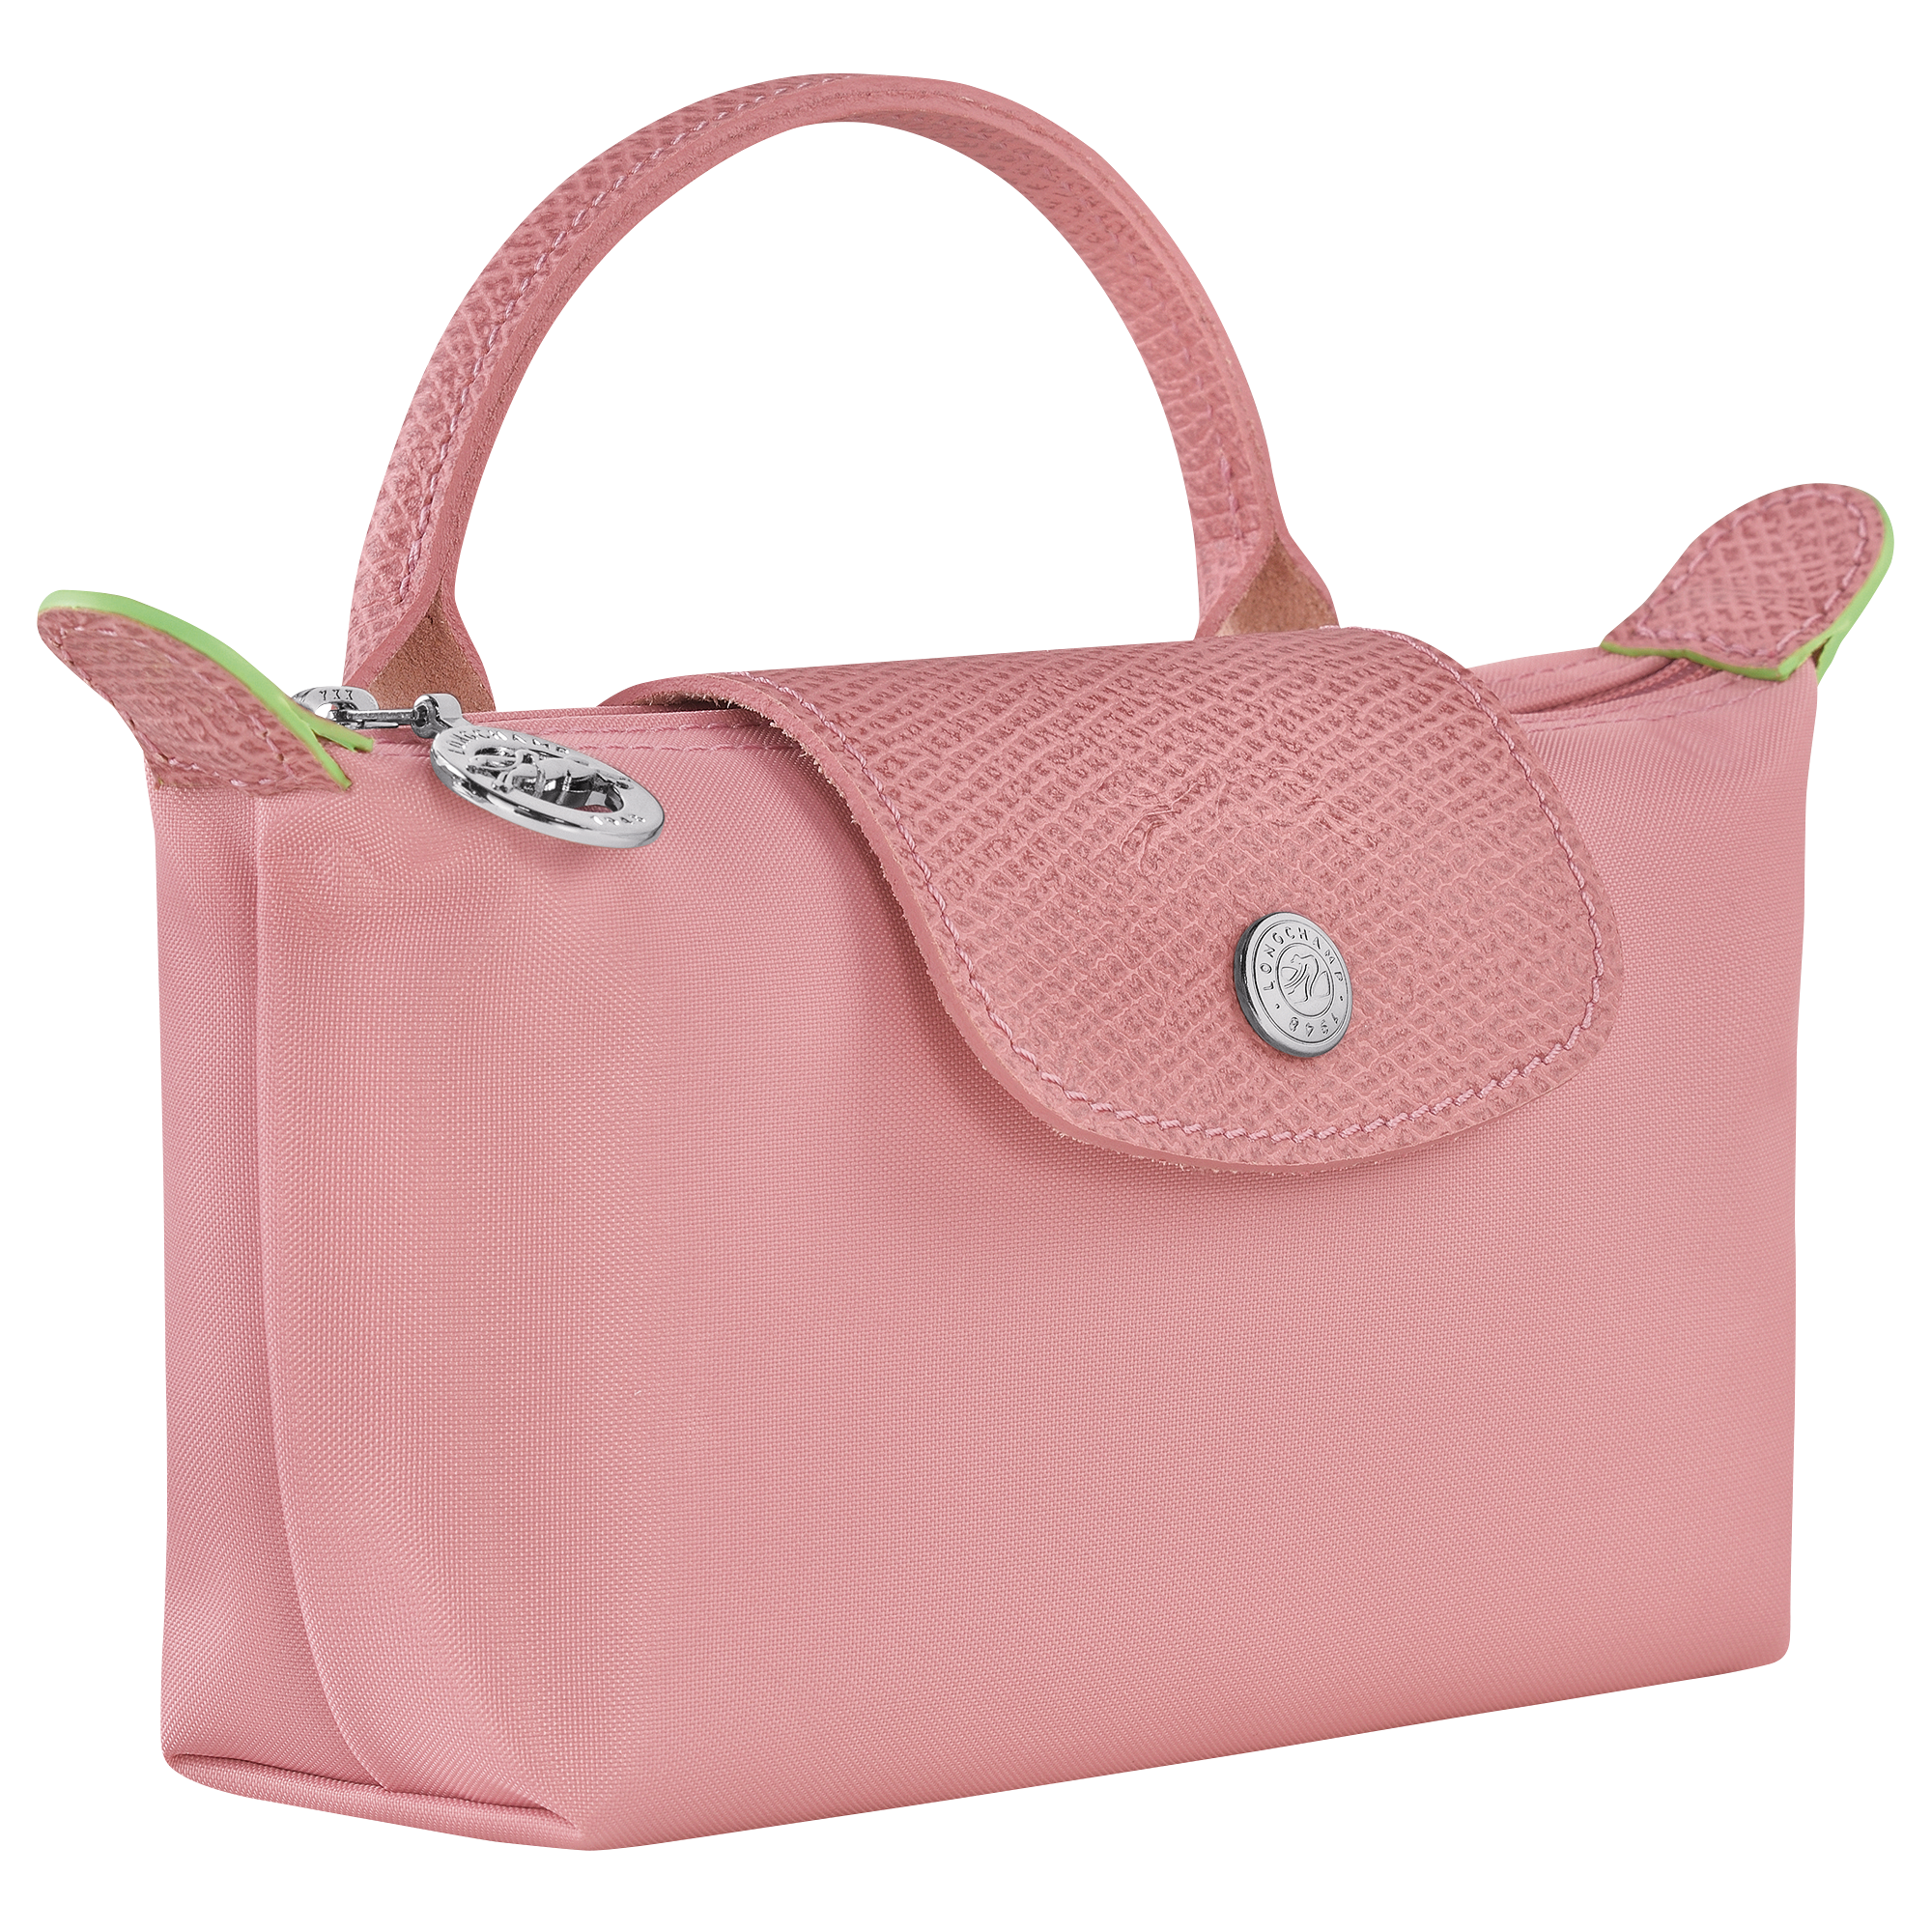 Longchamp Mini Le Pliage Tote - Pink Mini Bags, Handbags